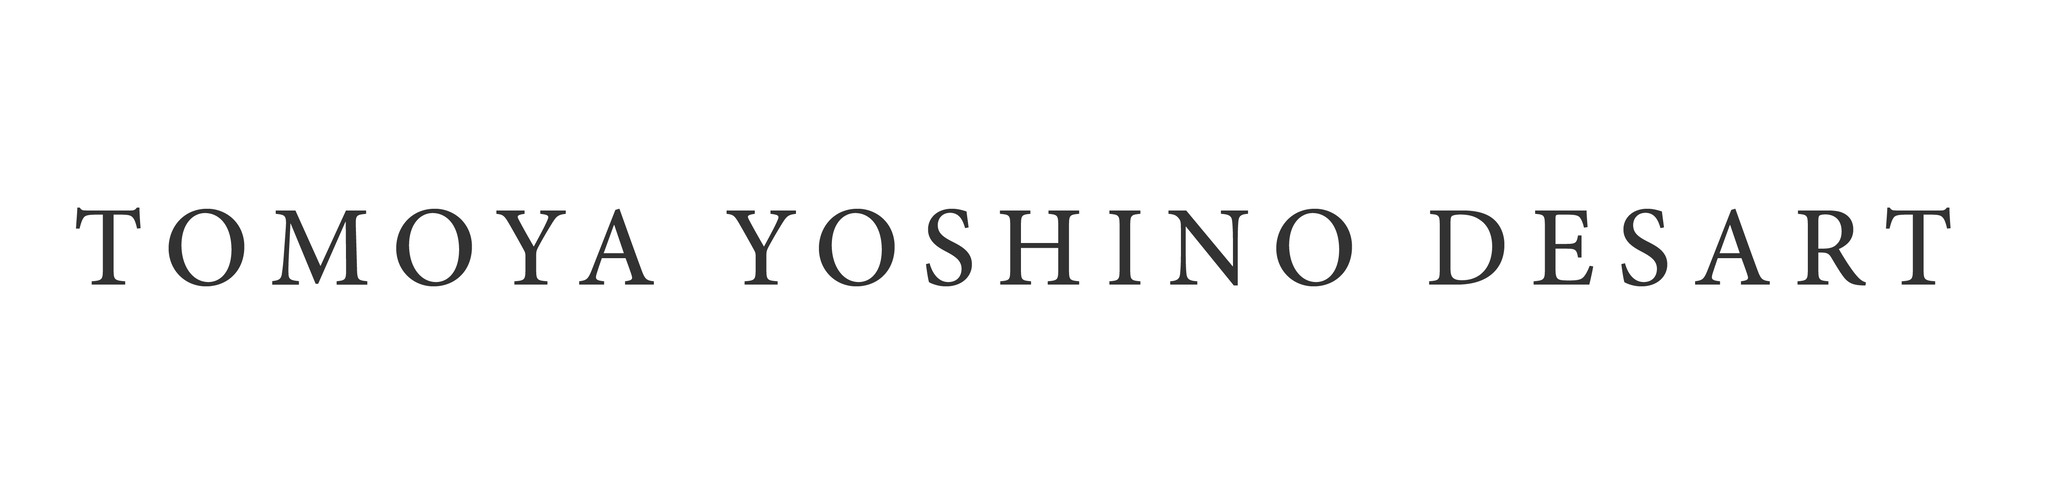 TOMOYA YOSHINO DESART